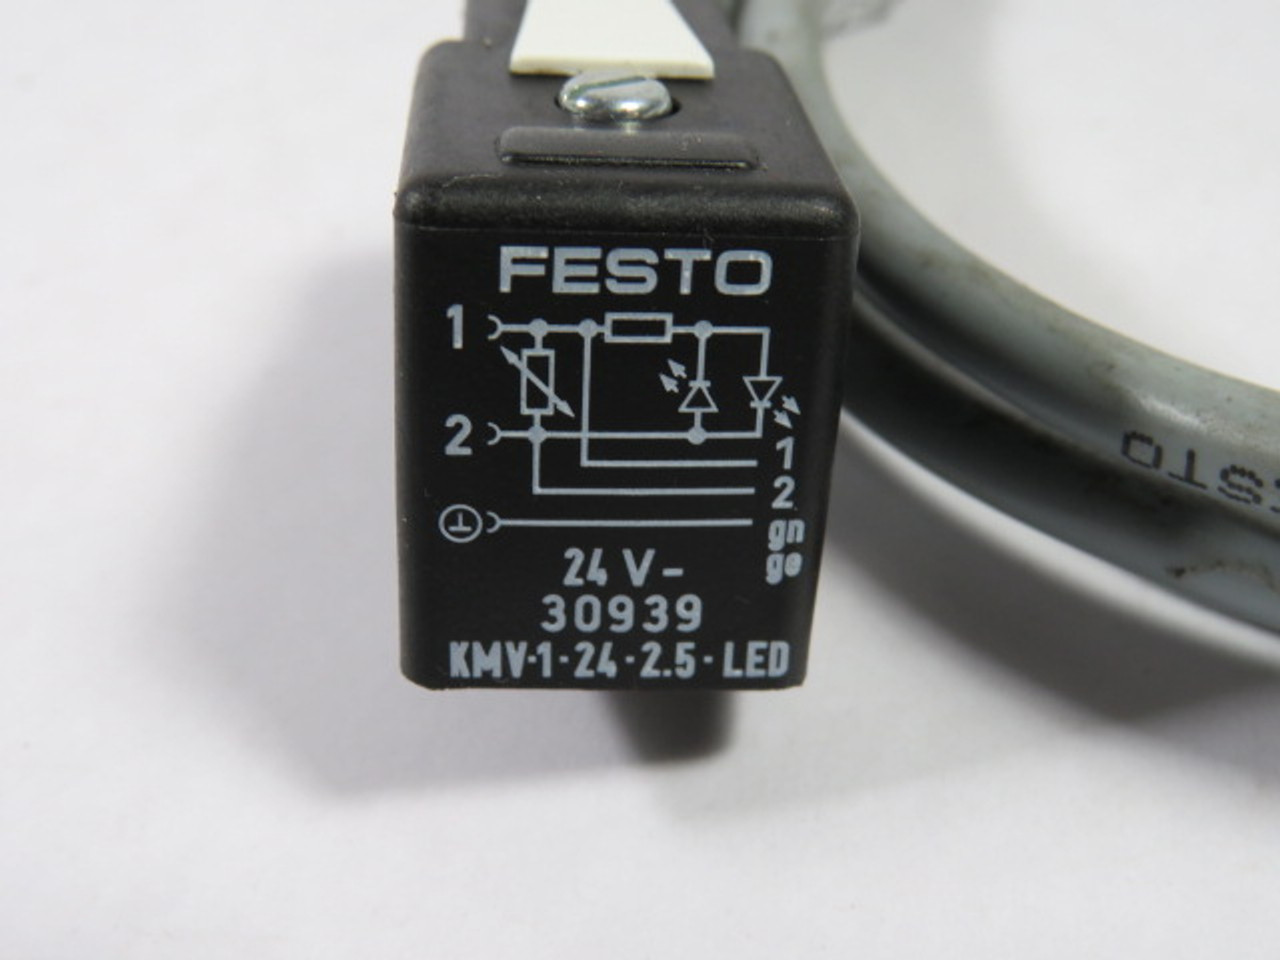 Festo 30939 Connector Socket For Valves W/ V Solenoids 24V USED